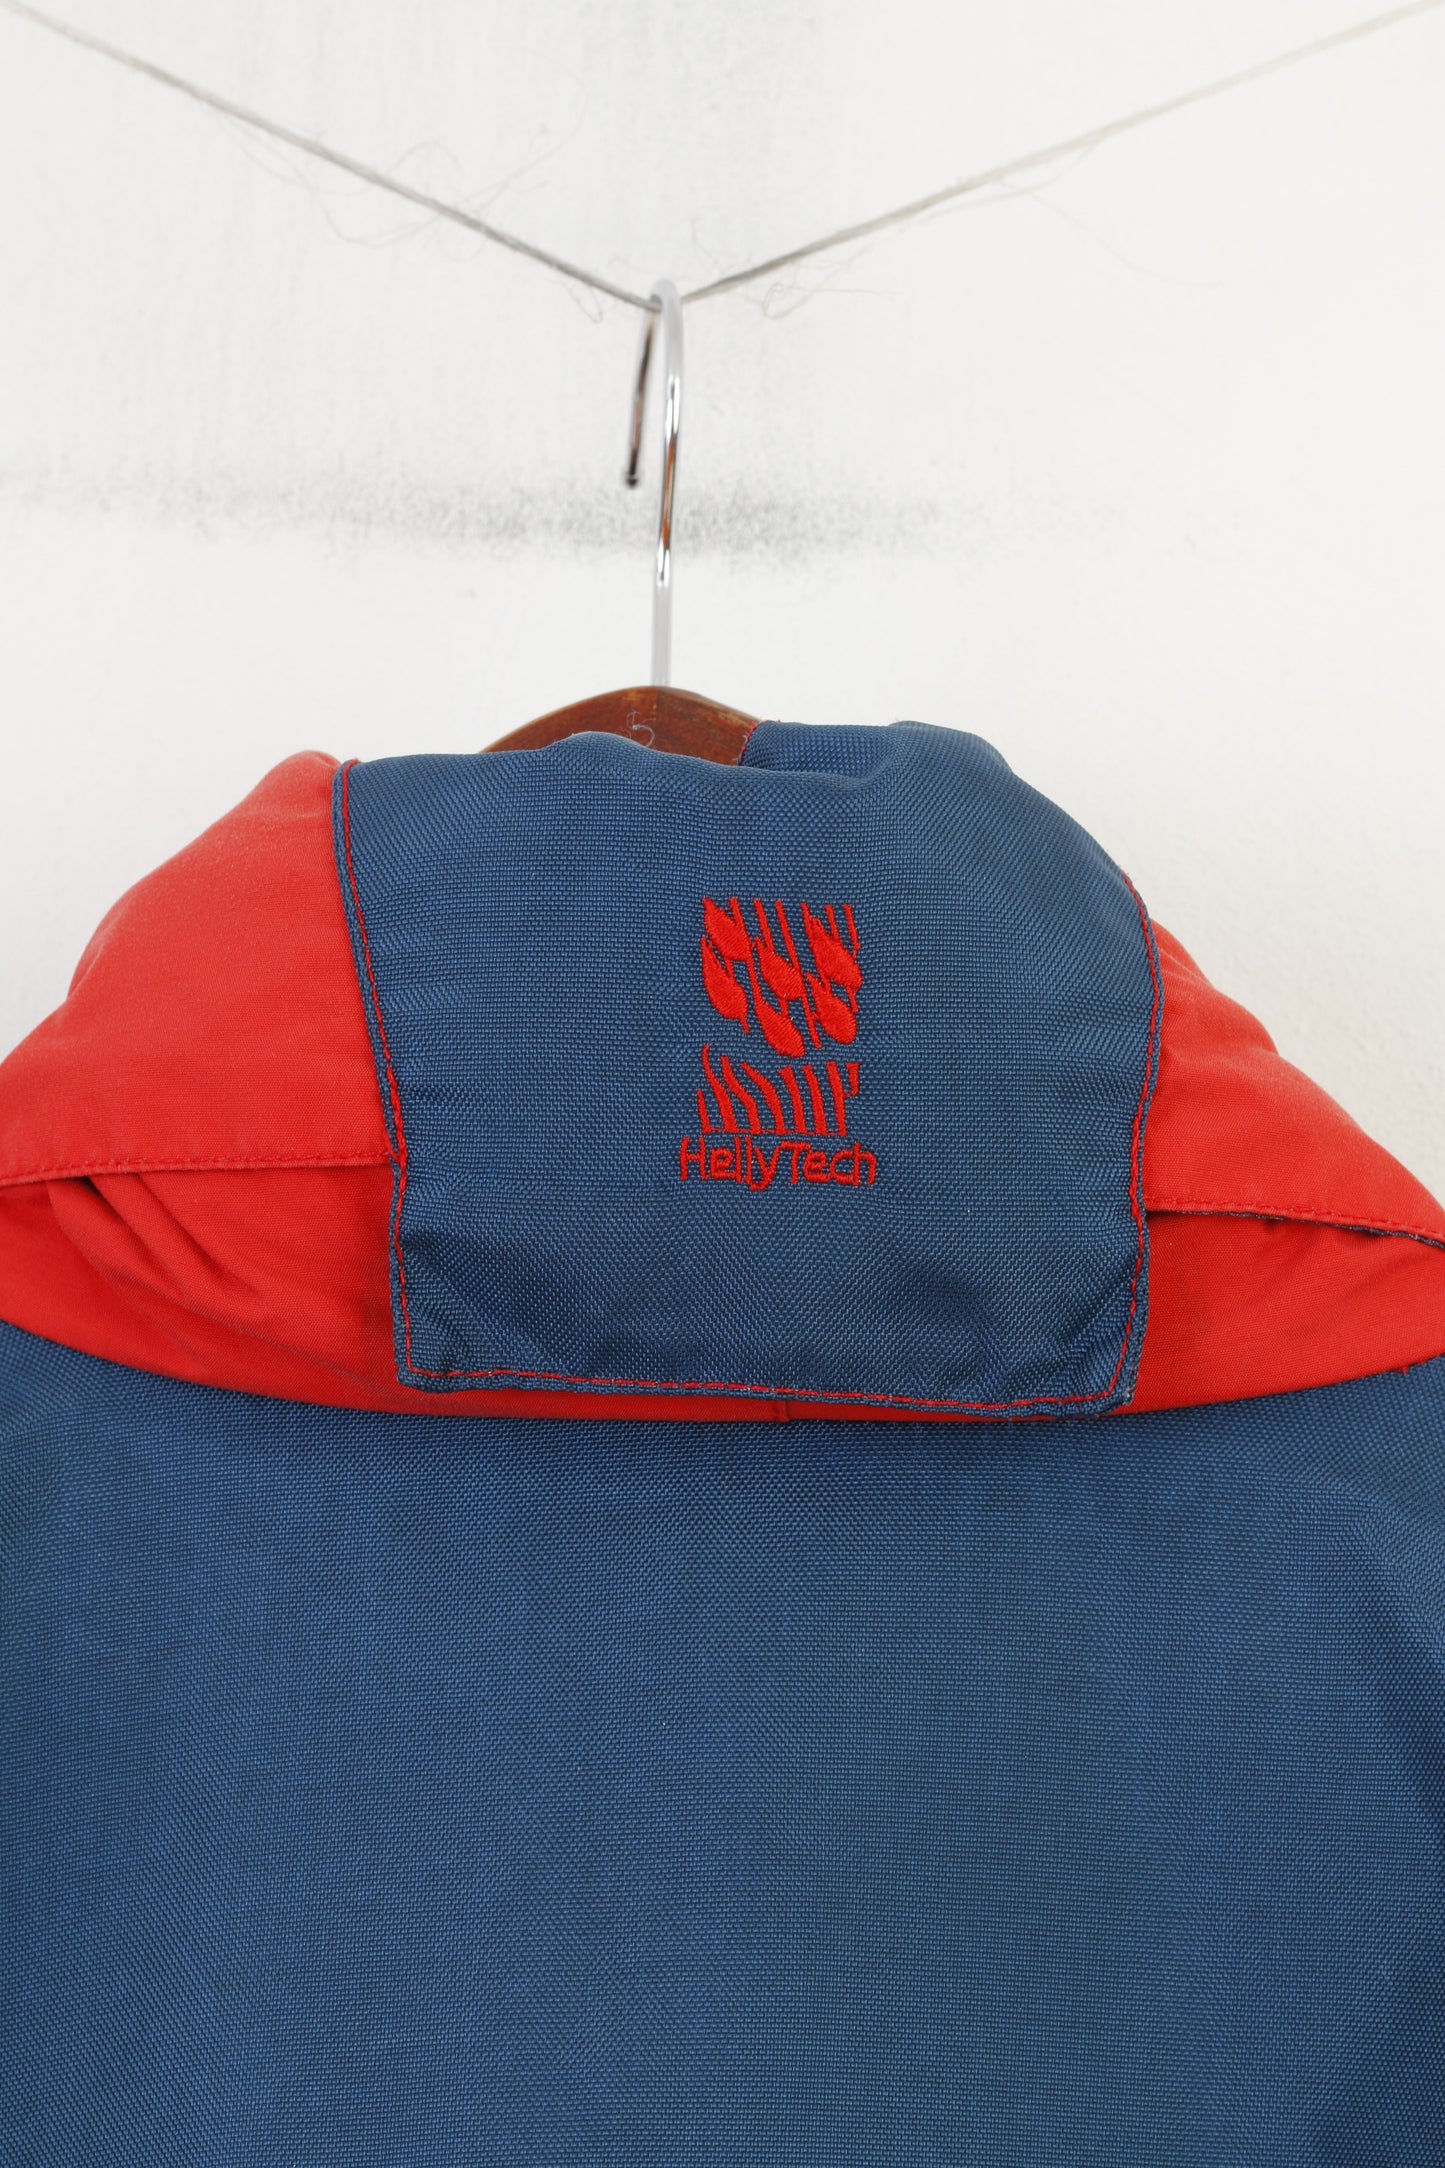 Helly Hansen Men XL Jacket Hood Red Pockets Vintage Nylon Full Zipper Outwear Top